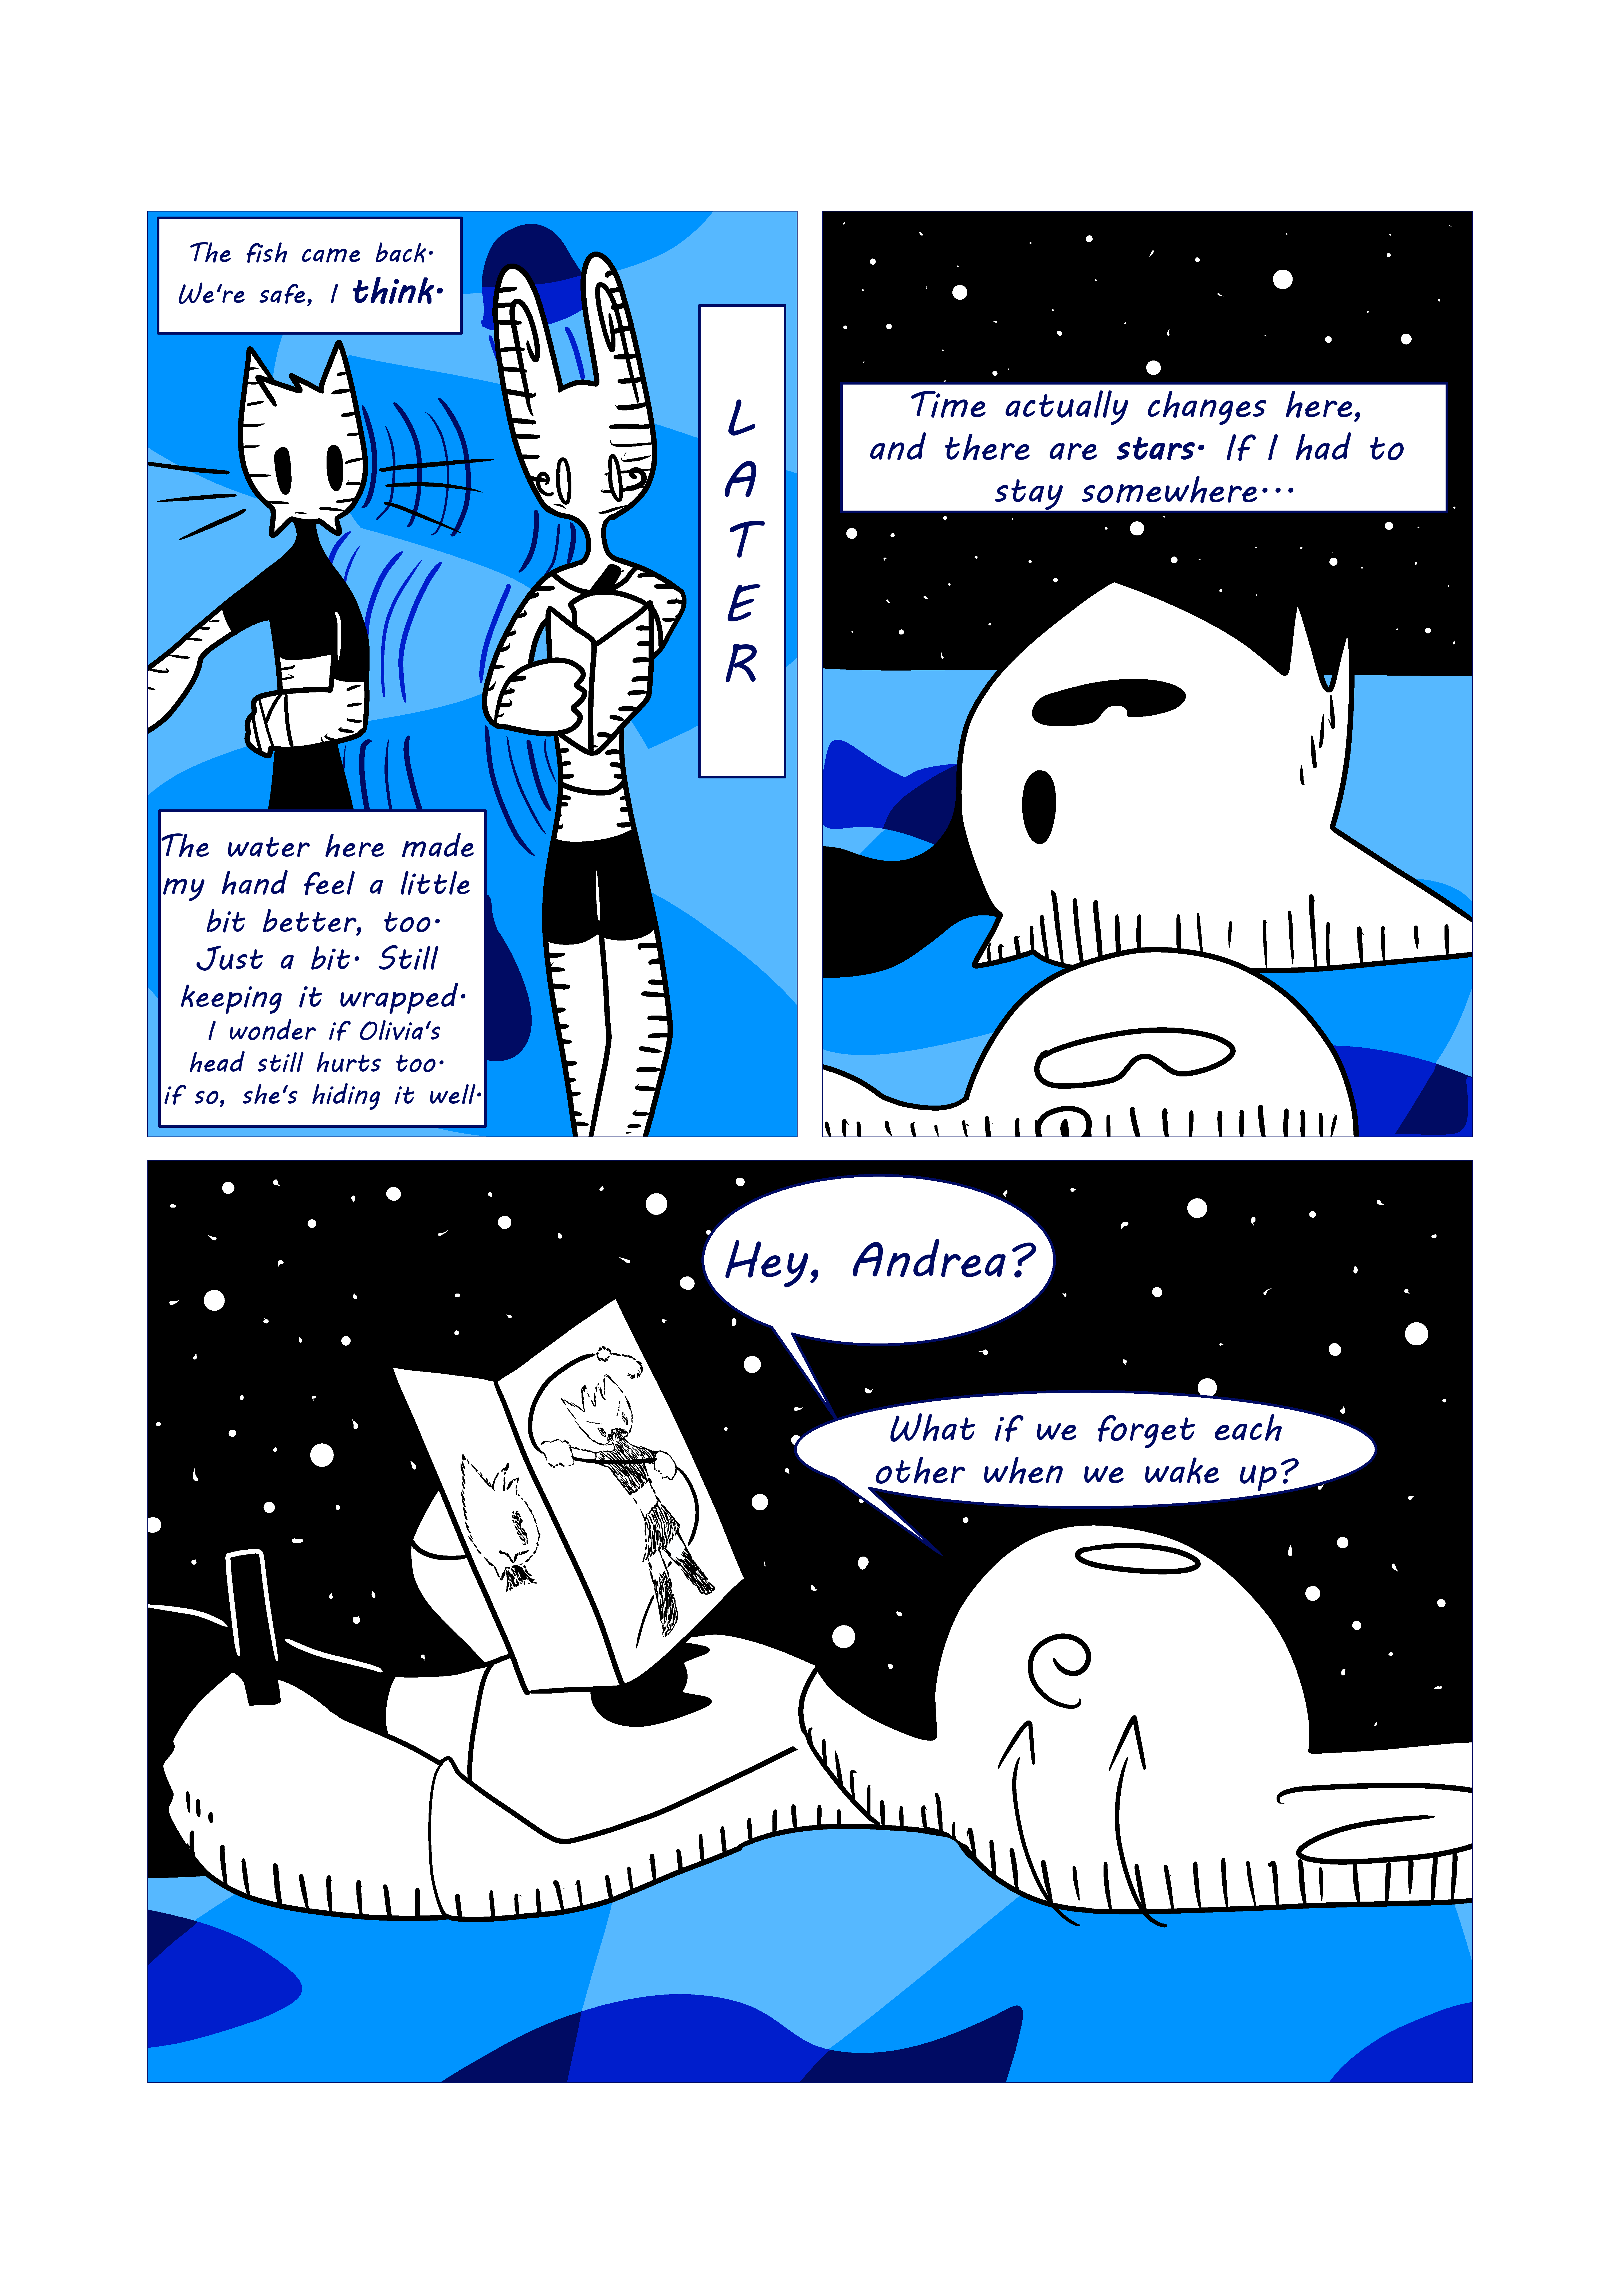 IaaDiTe Page 141 : Stars and Time